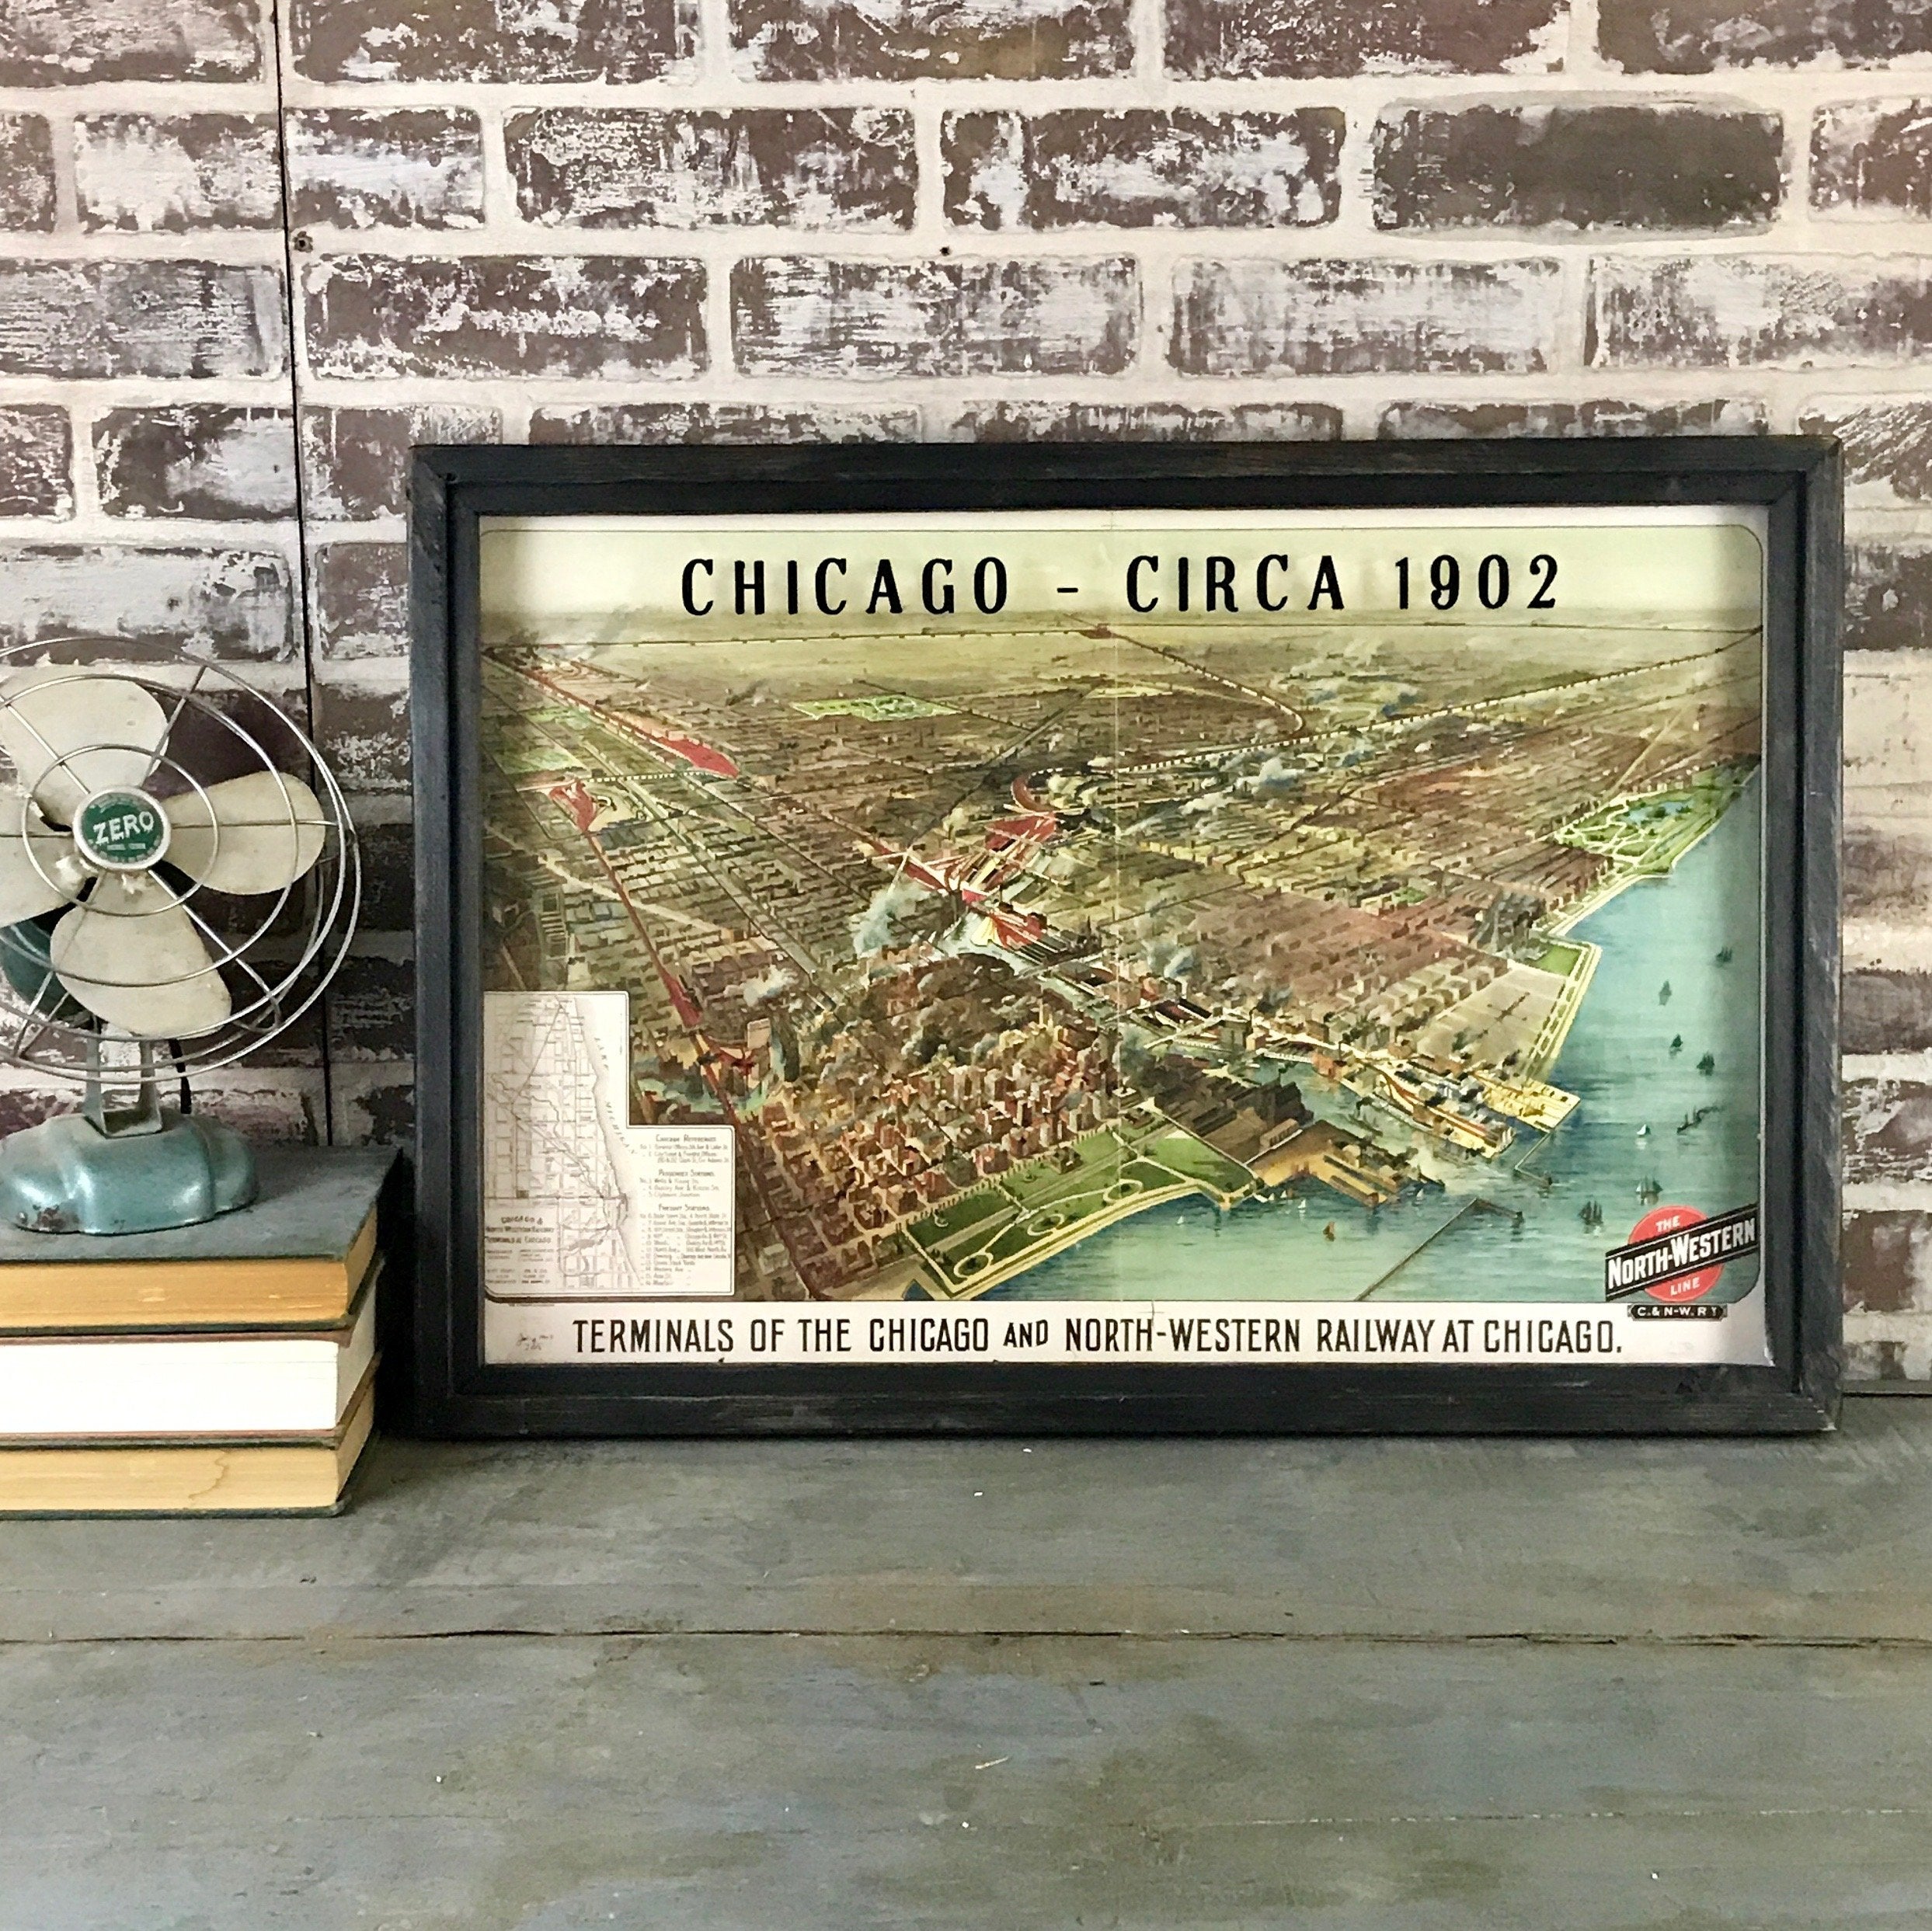 1902 Chicago Framed Railway Map